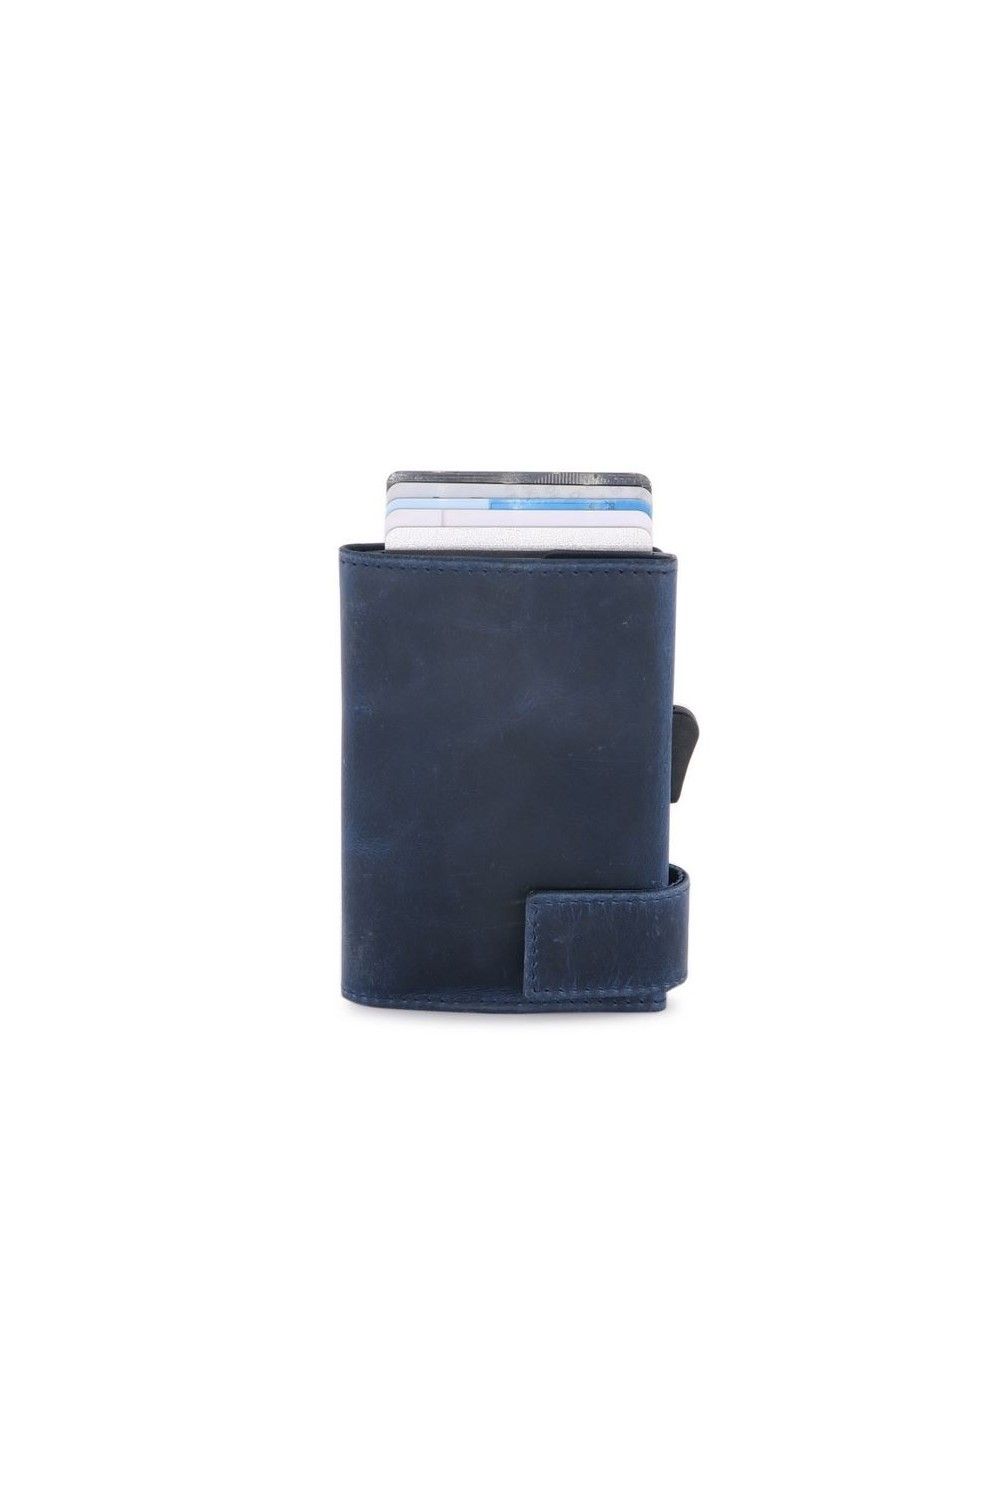 SecWal Card Case DK Leather Hunter Blue